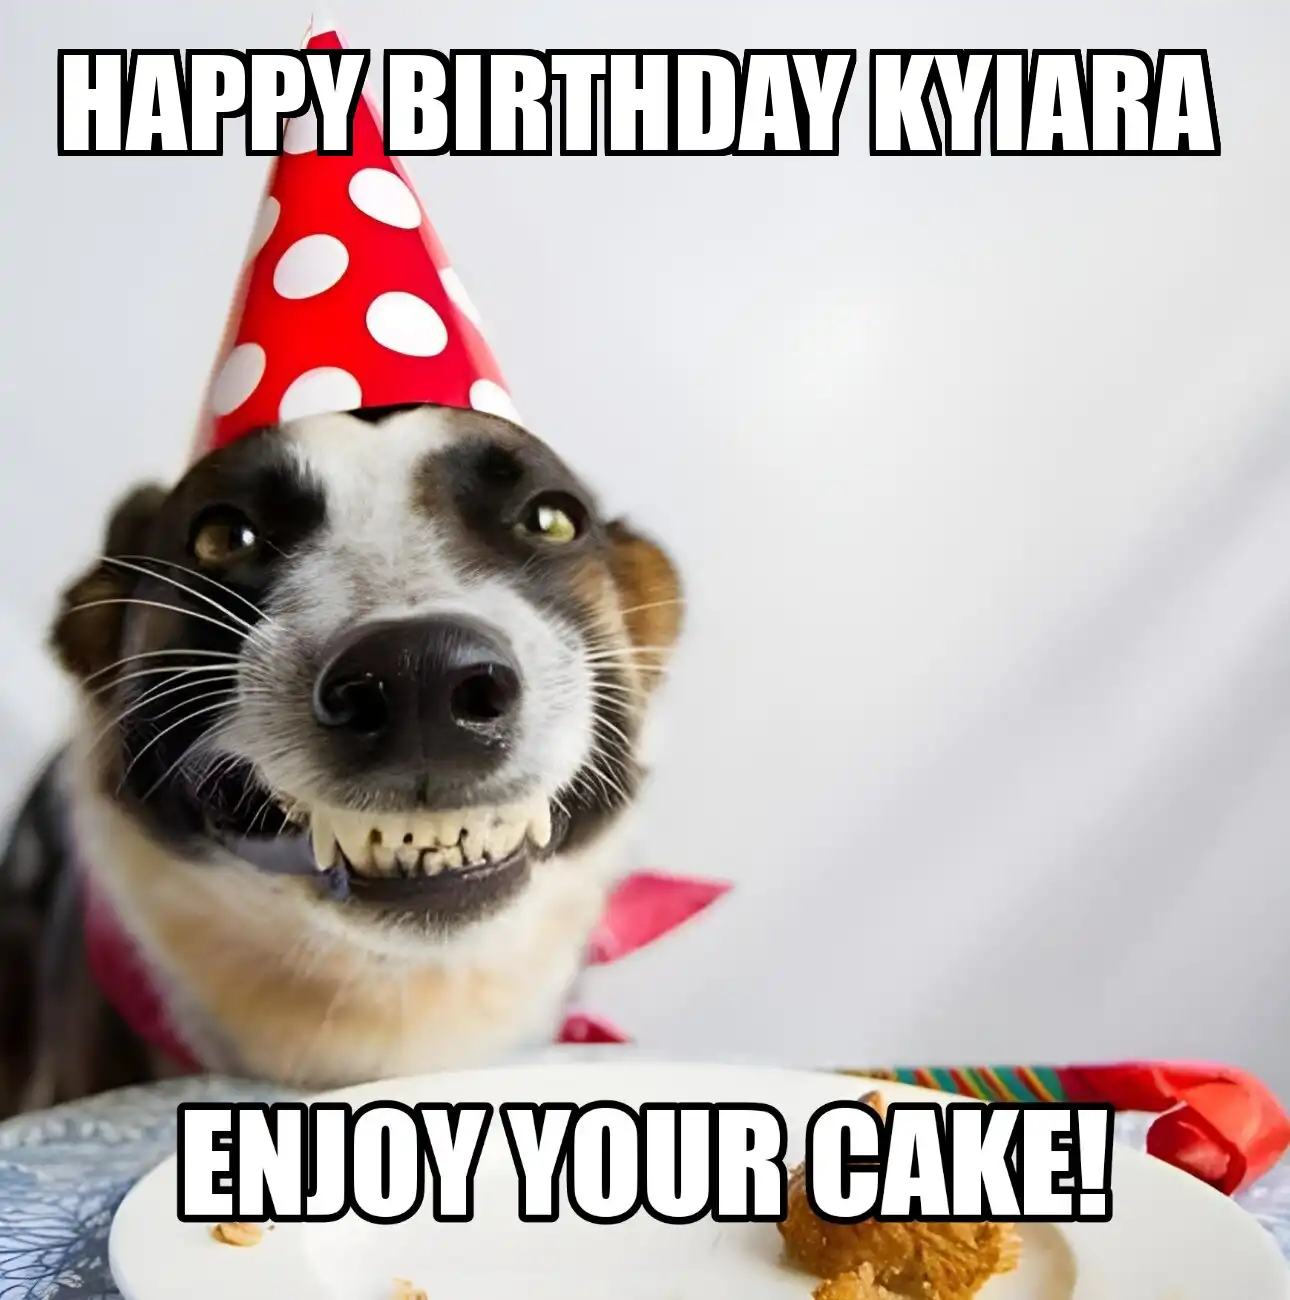 Happy Birthday Kyiara Enjoy Your Cake Dog Meme